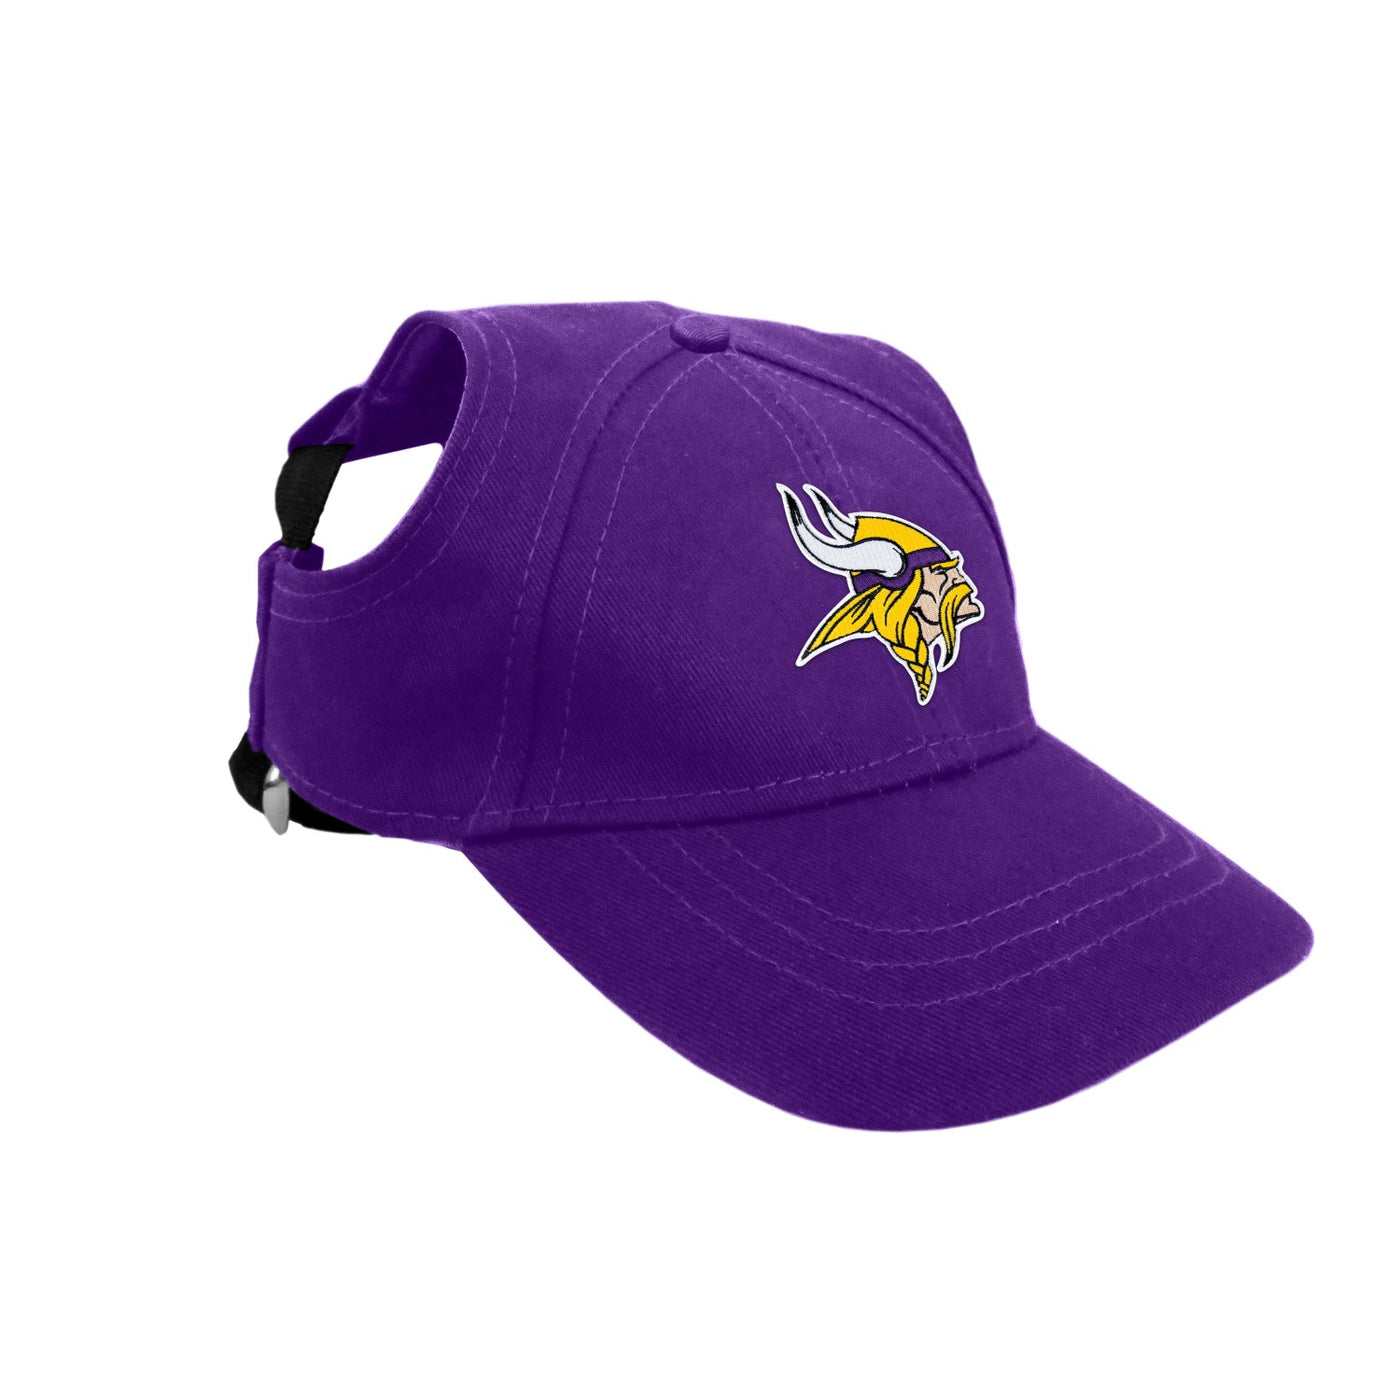 Minnesota Vikings Pet Baseball Hat - Small